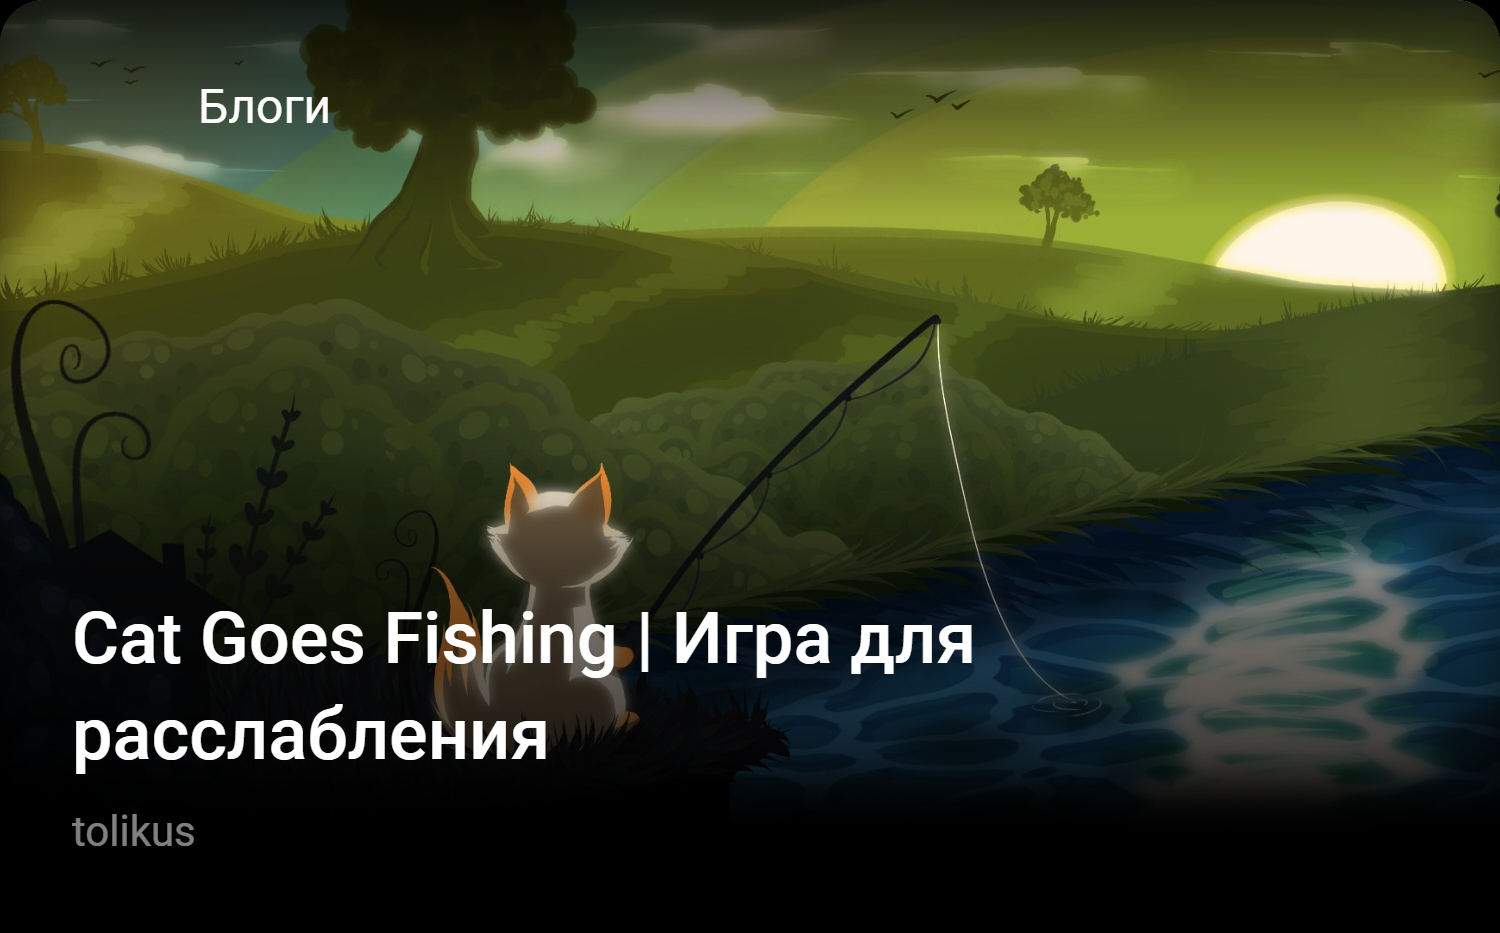 Cat goes fishing apk pc